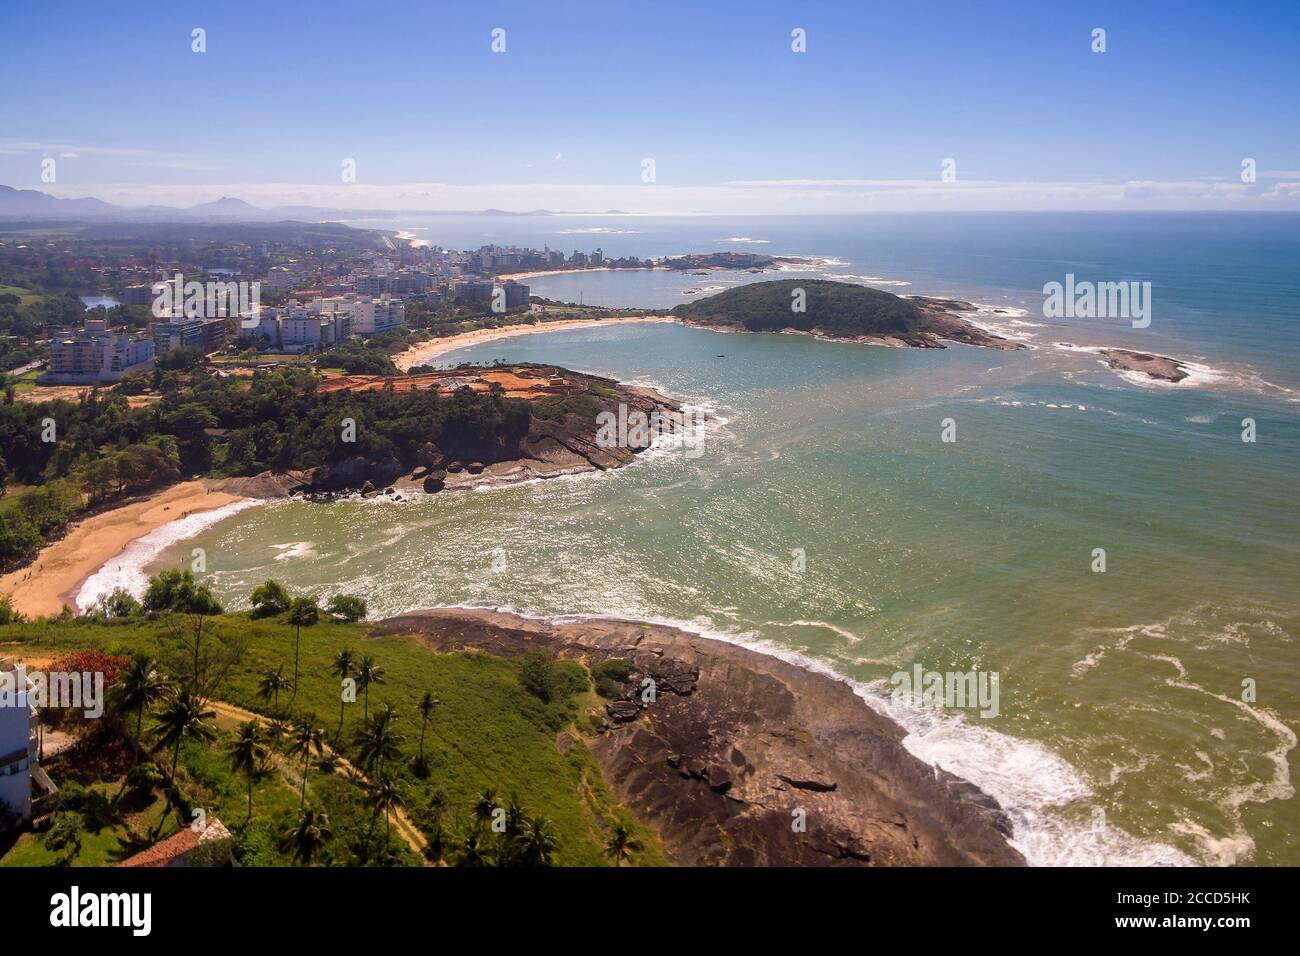 Aerial view of the Priest's, Bacutia and Peracanga beaches in Guarapari, Espirito Santo, Brazil. Stock Photo